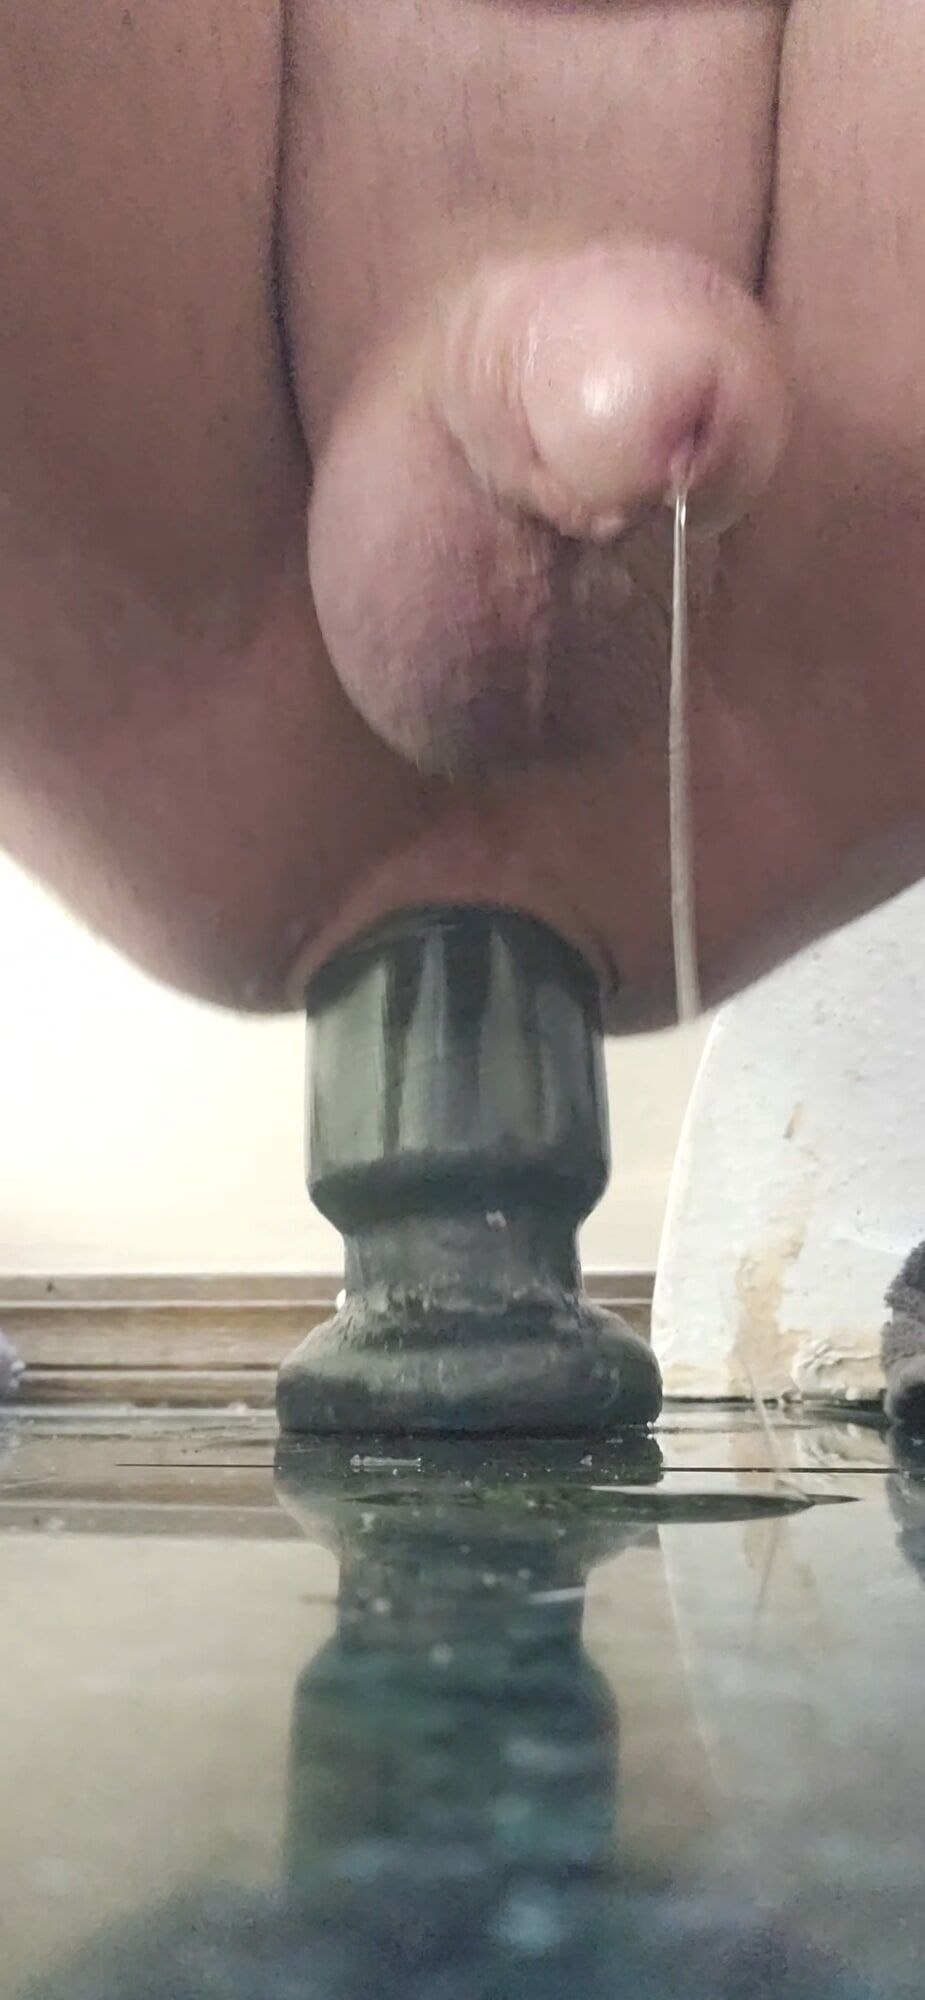 Presume dripping cock huge anal plug #23